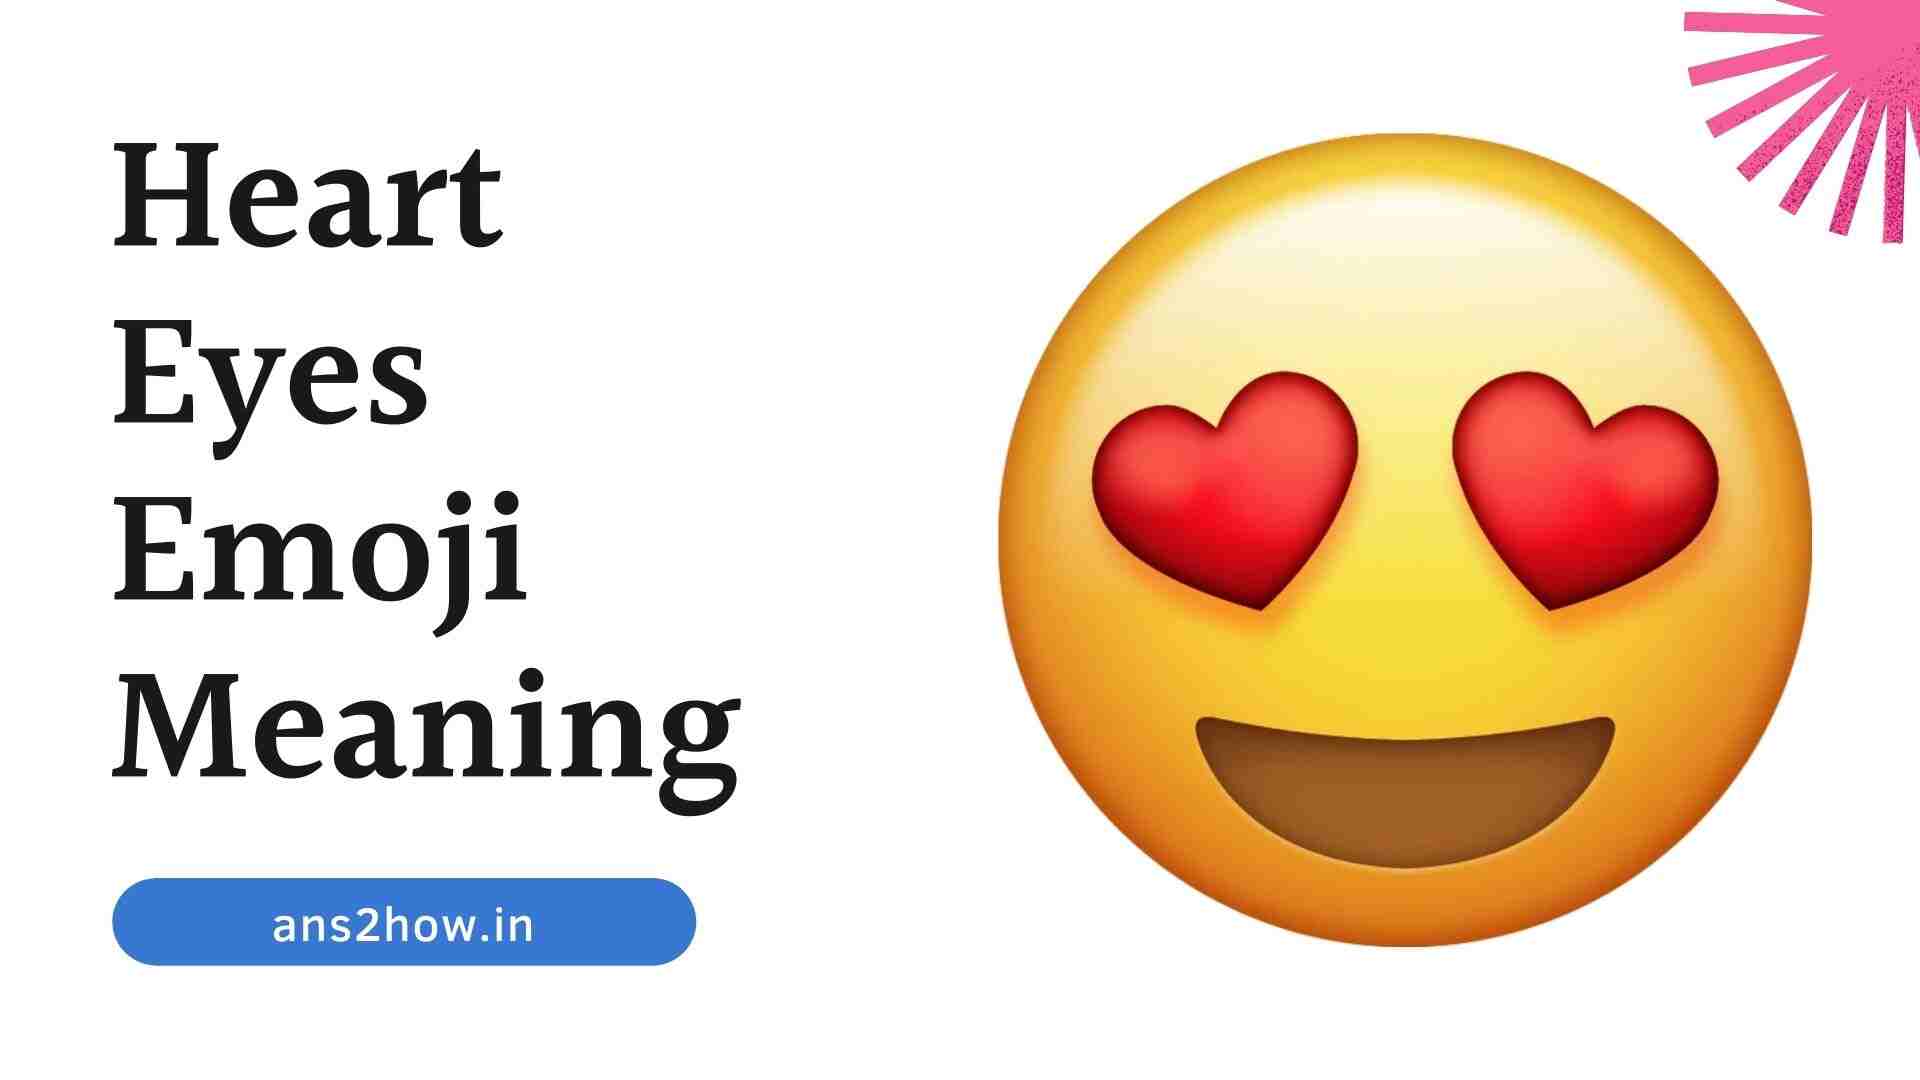 Heart Eyes Emoji Meaning